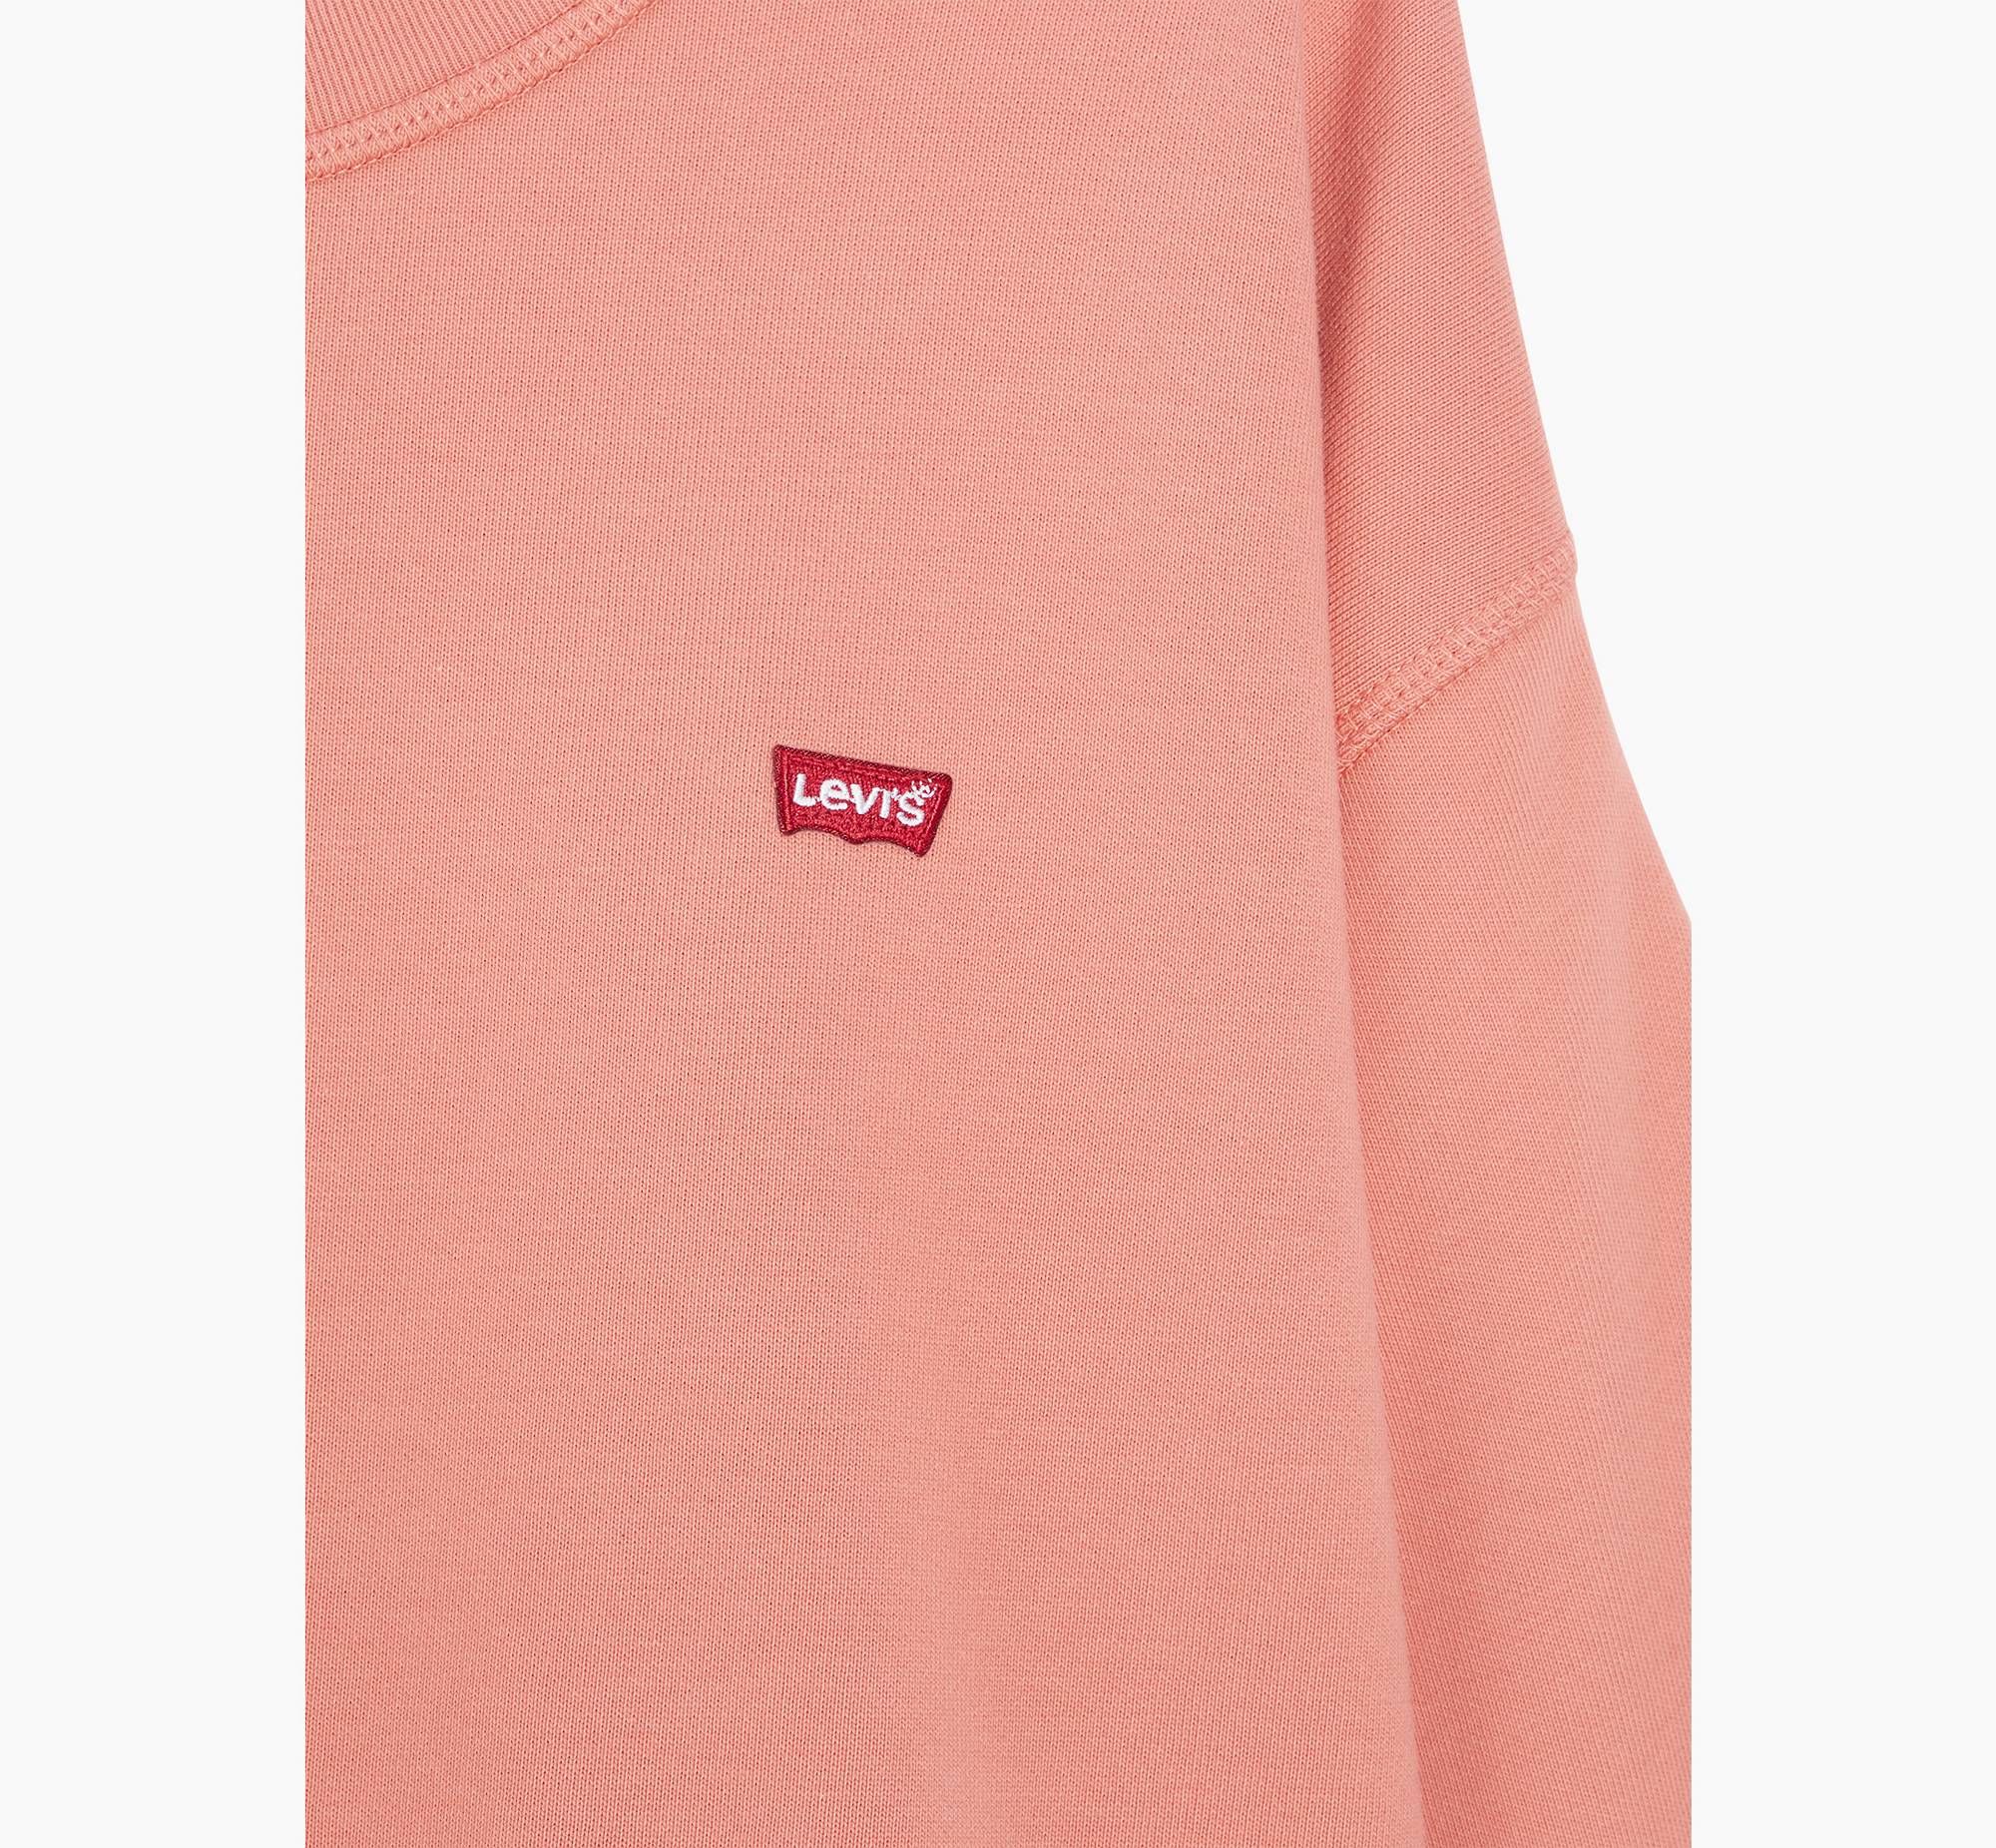 Standard Crewneck Sweatshirt (Plus Size) 4